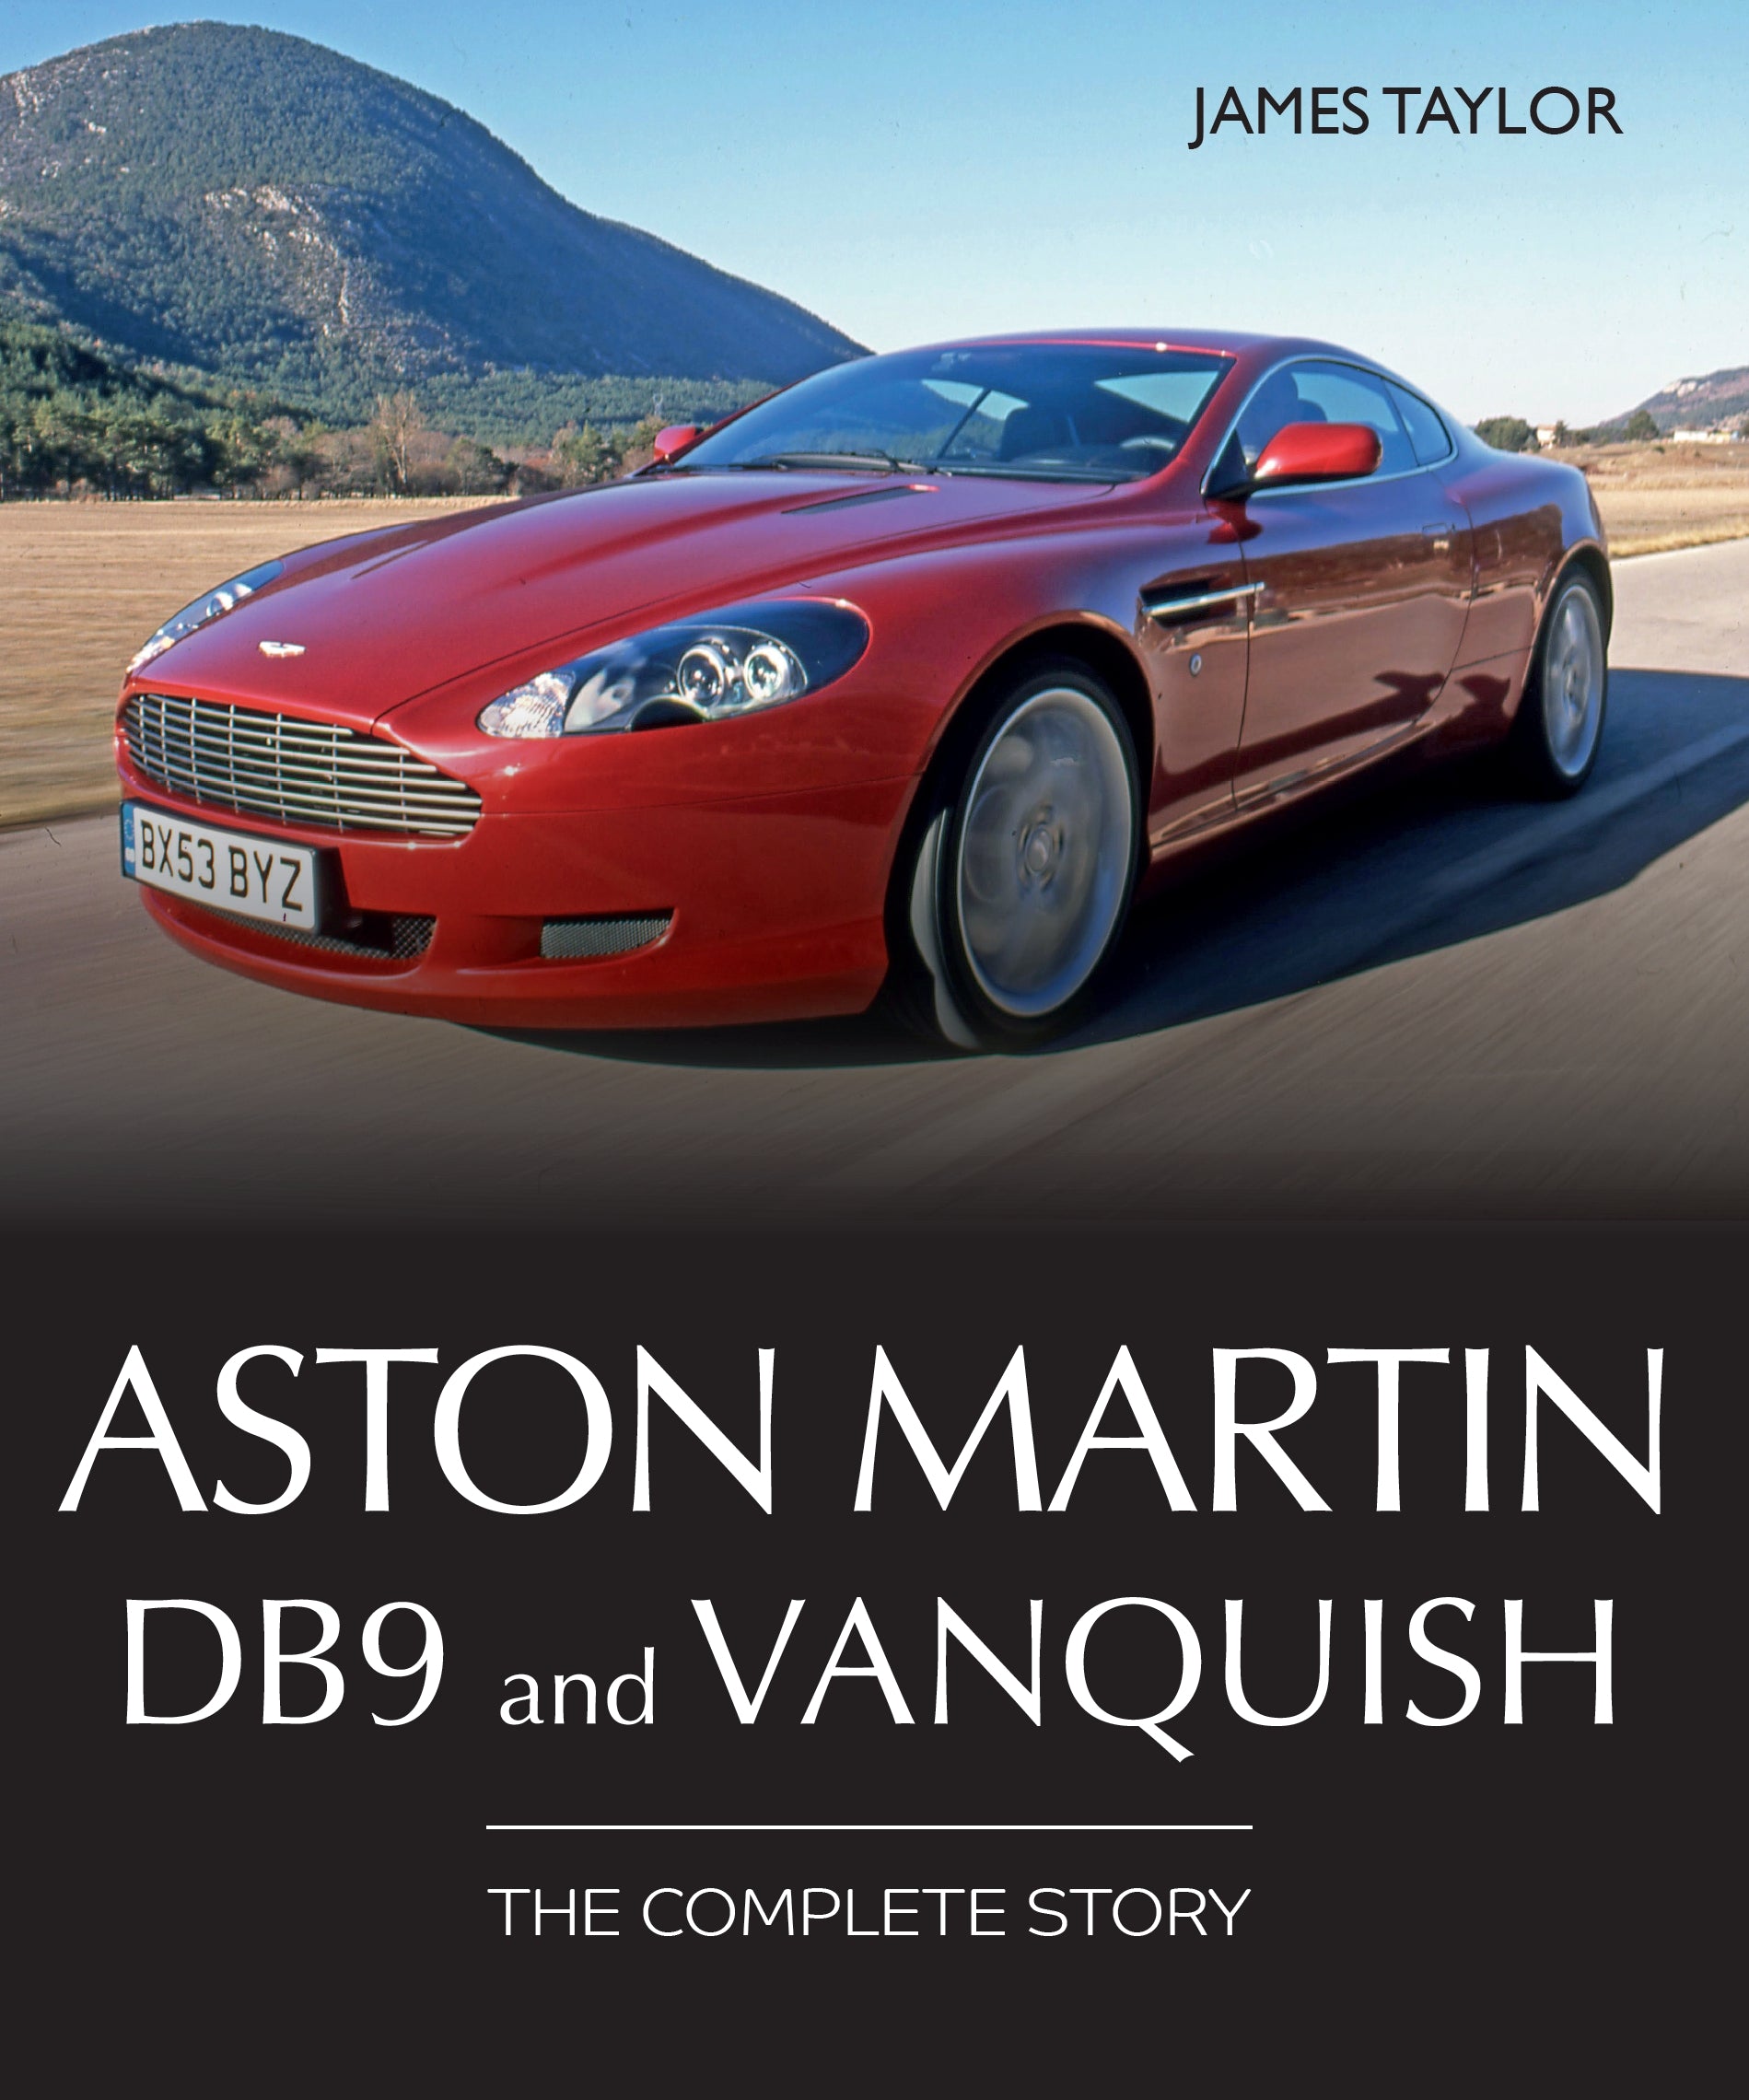 Aston Martin DB9 and Vanquish